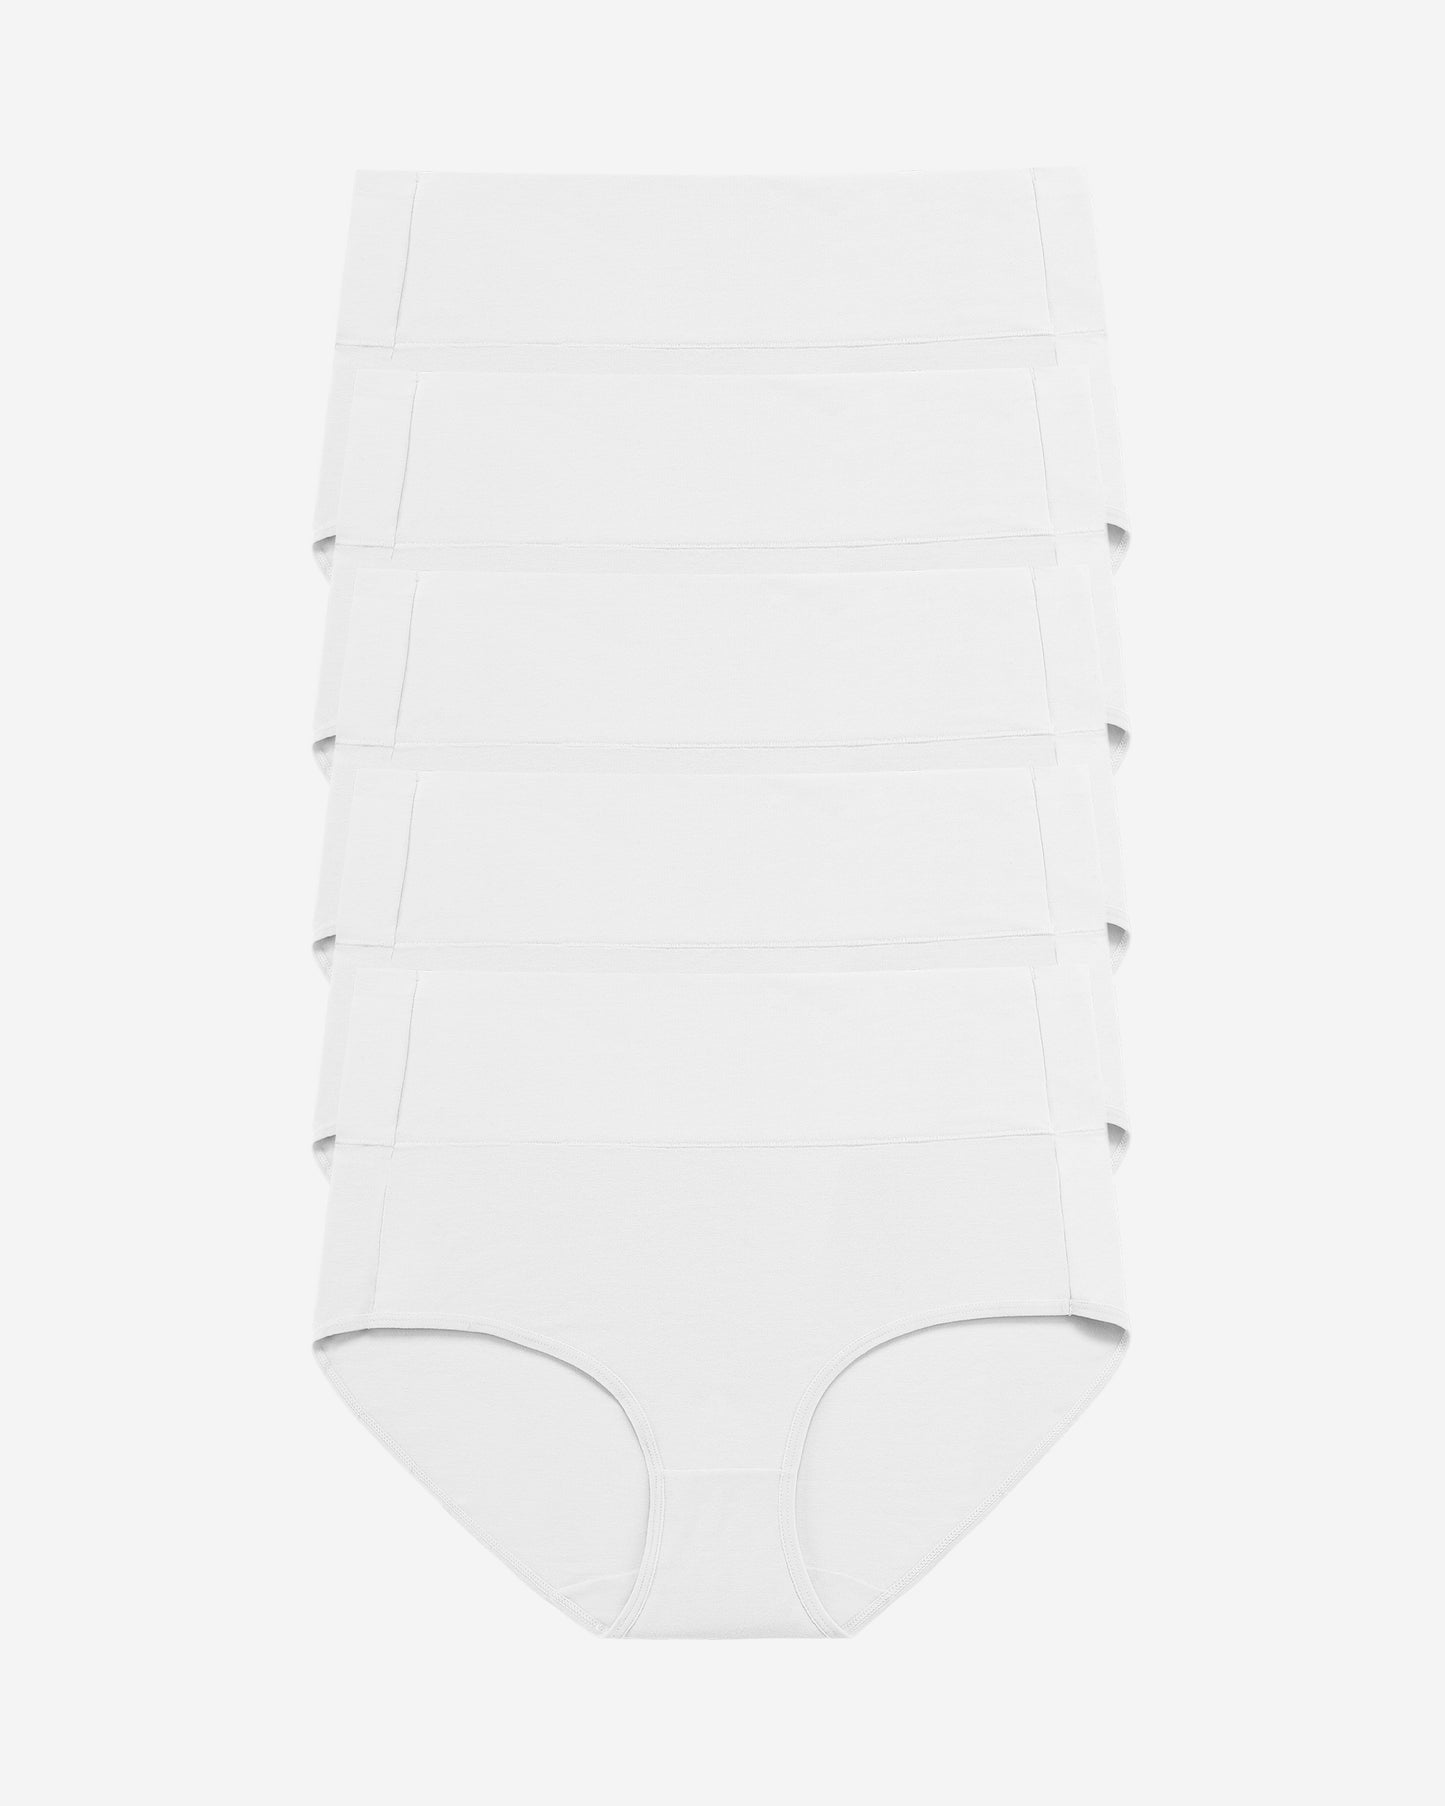 Women's Panties Soft Women Personal White Underwear Pack of 5